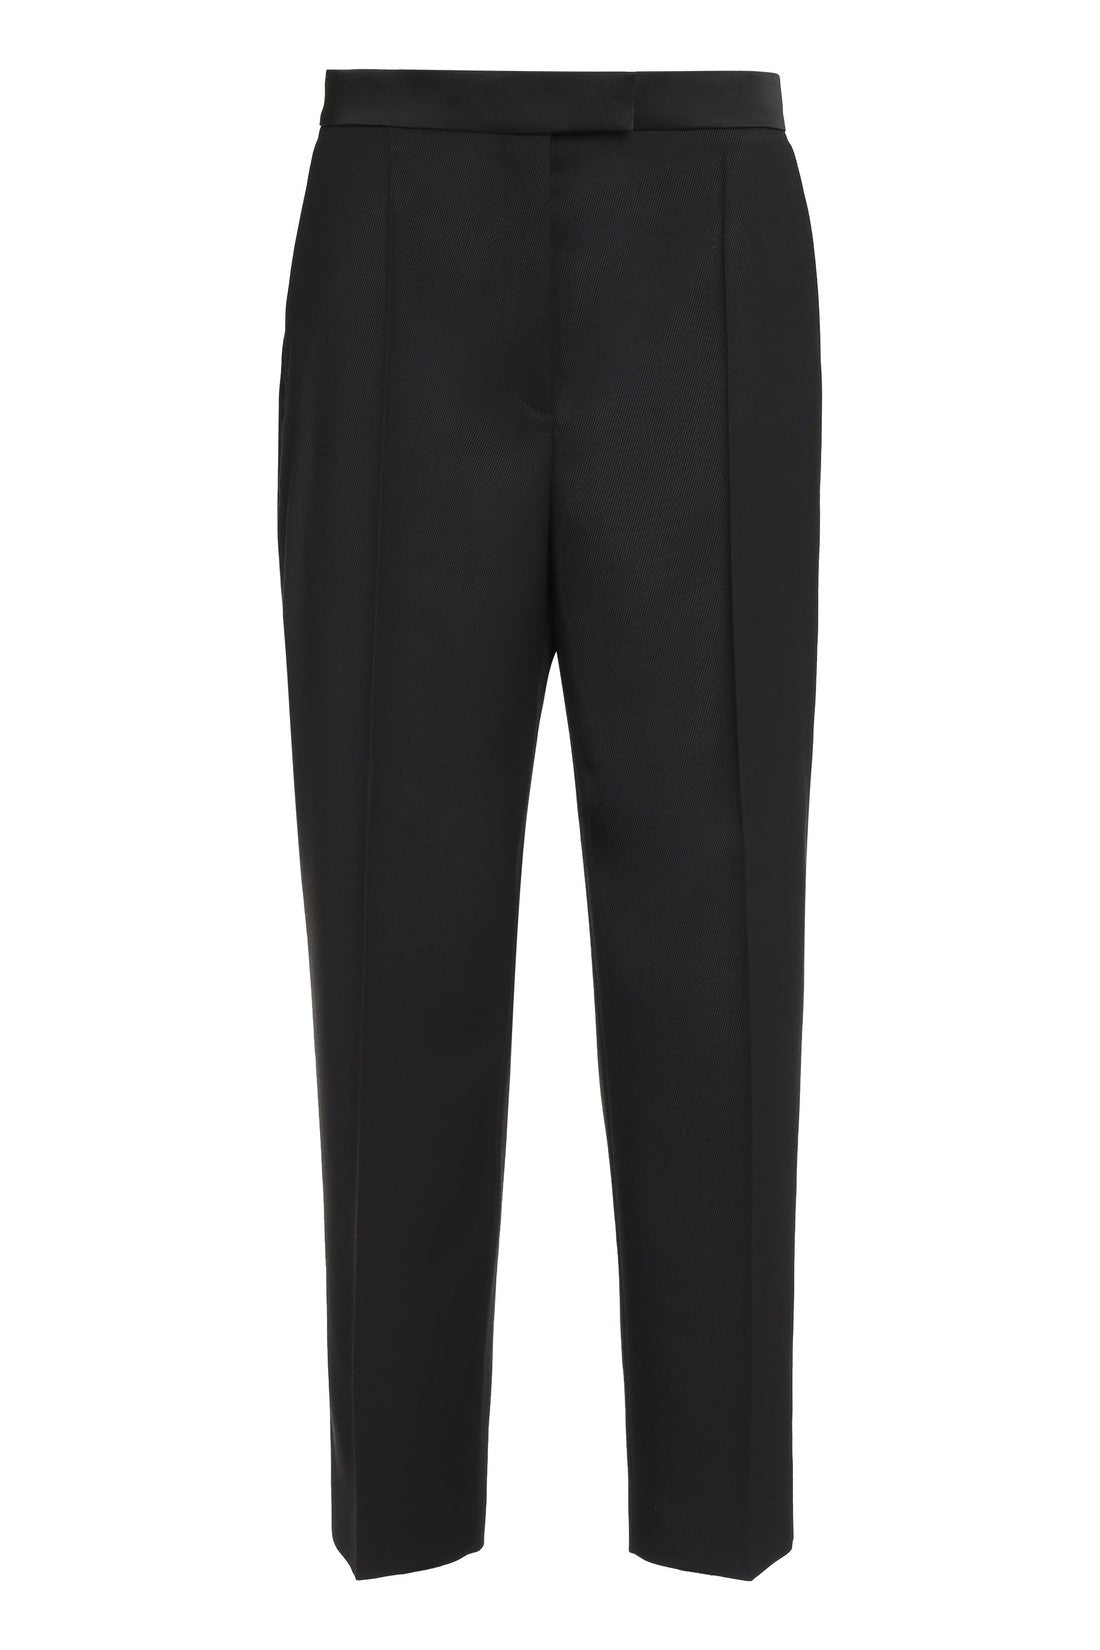 BOSS-OUTLET-SALE-Tatuxa tailored trousers-ARCHIVIST